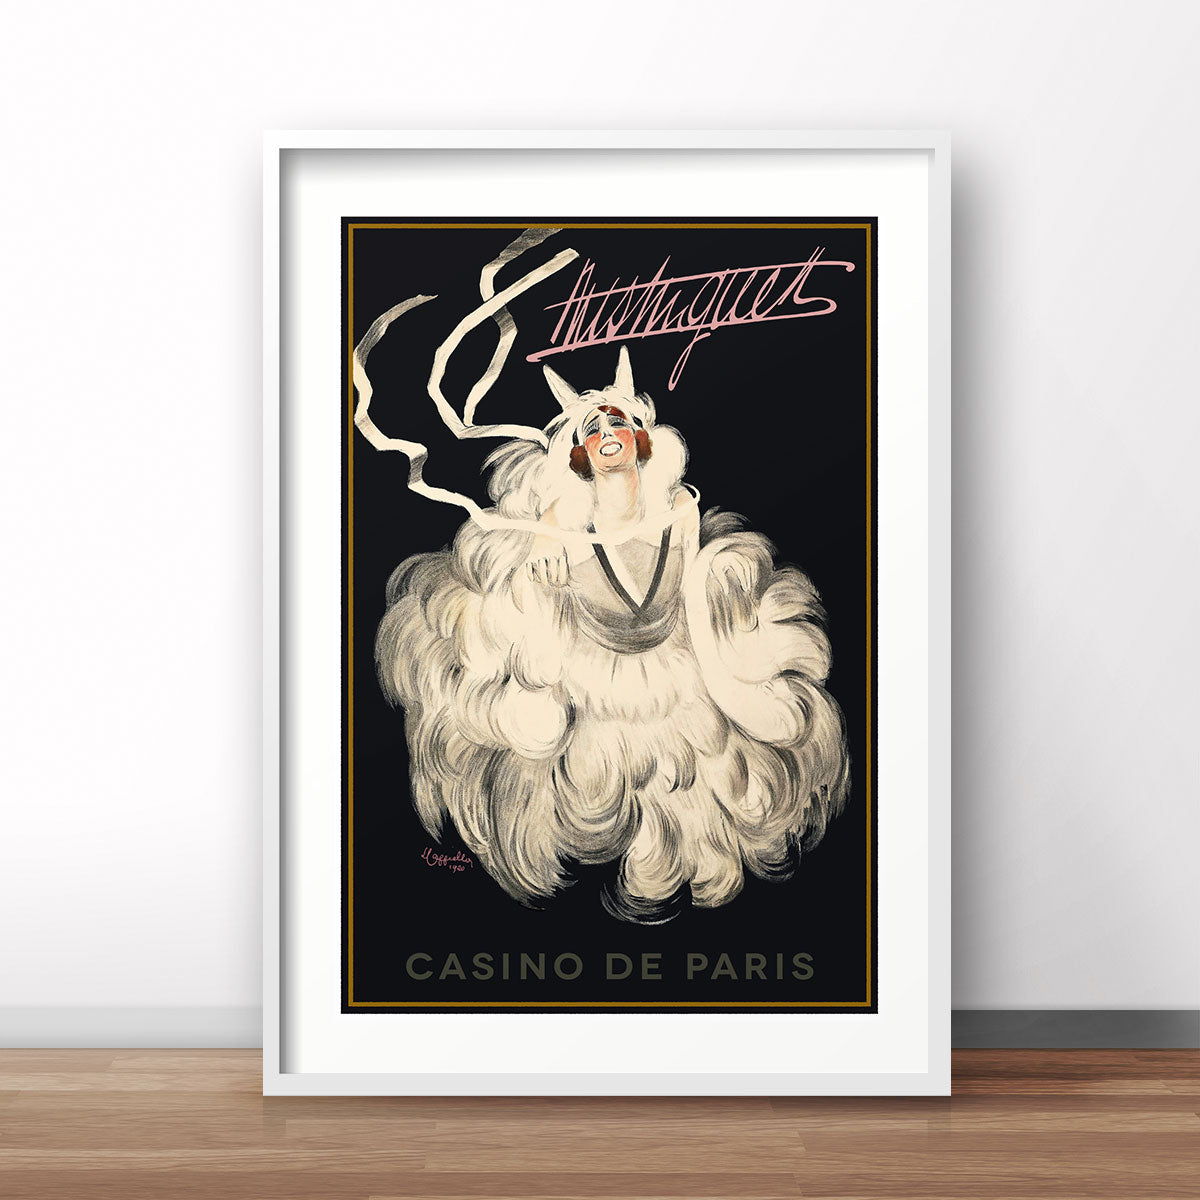 Casino de Paris retro vintage advertising poster print from Places We Luv